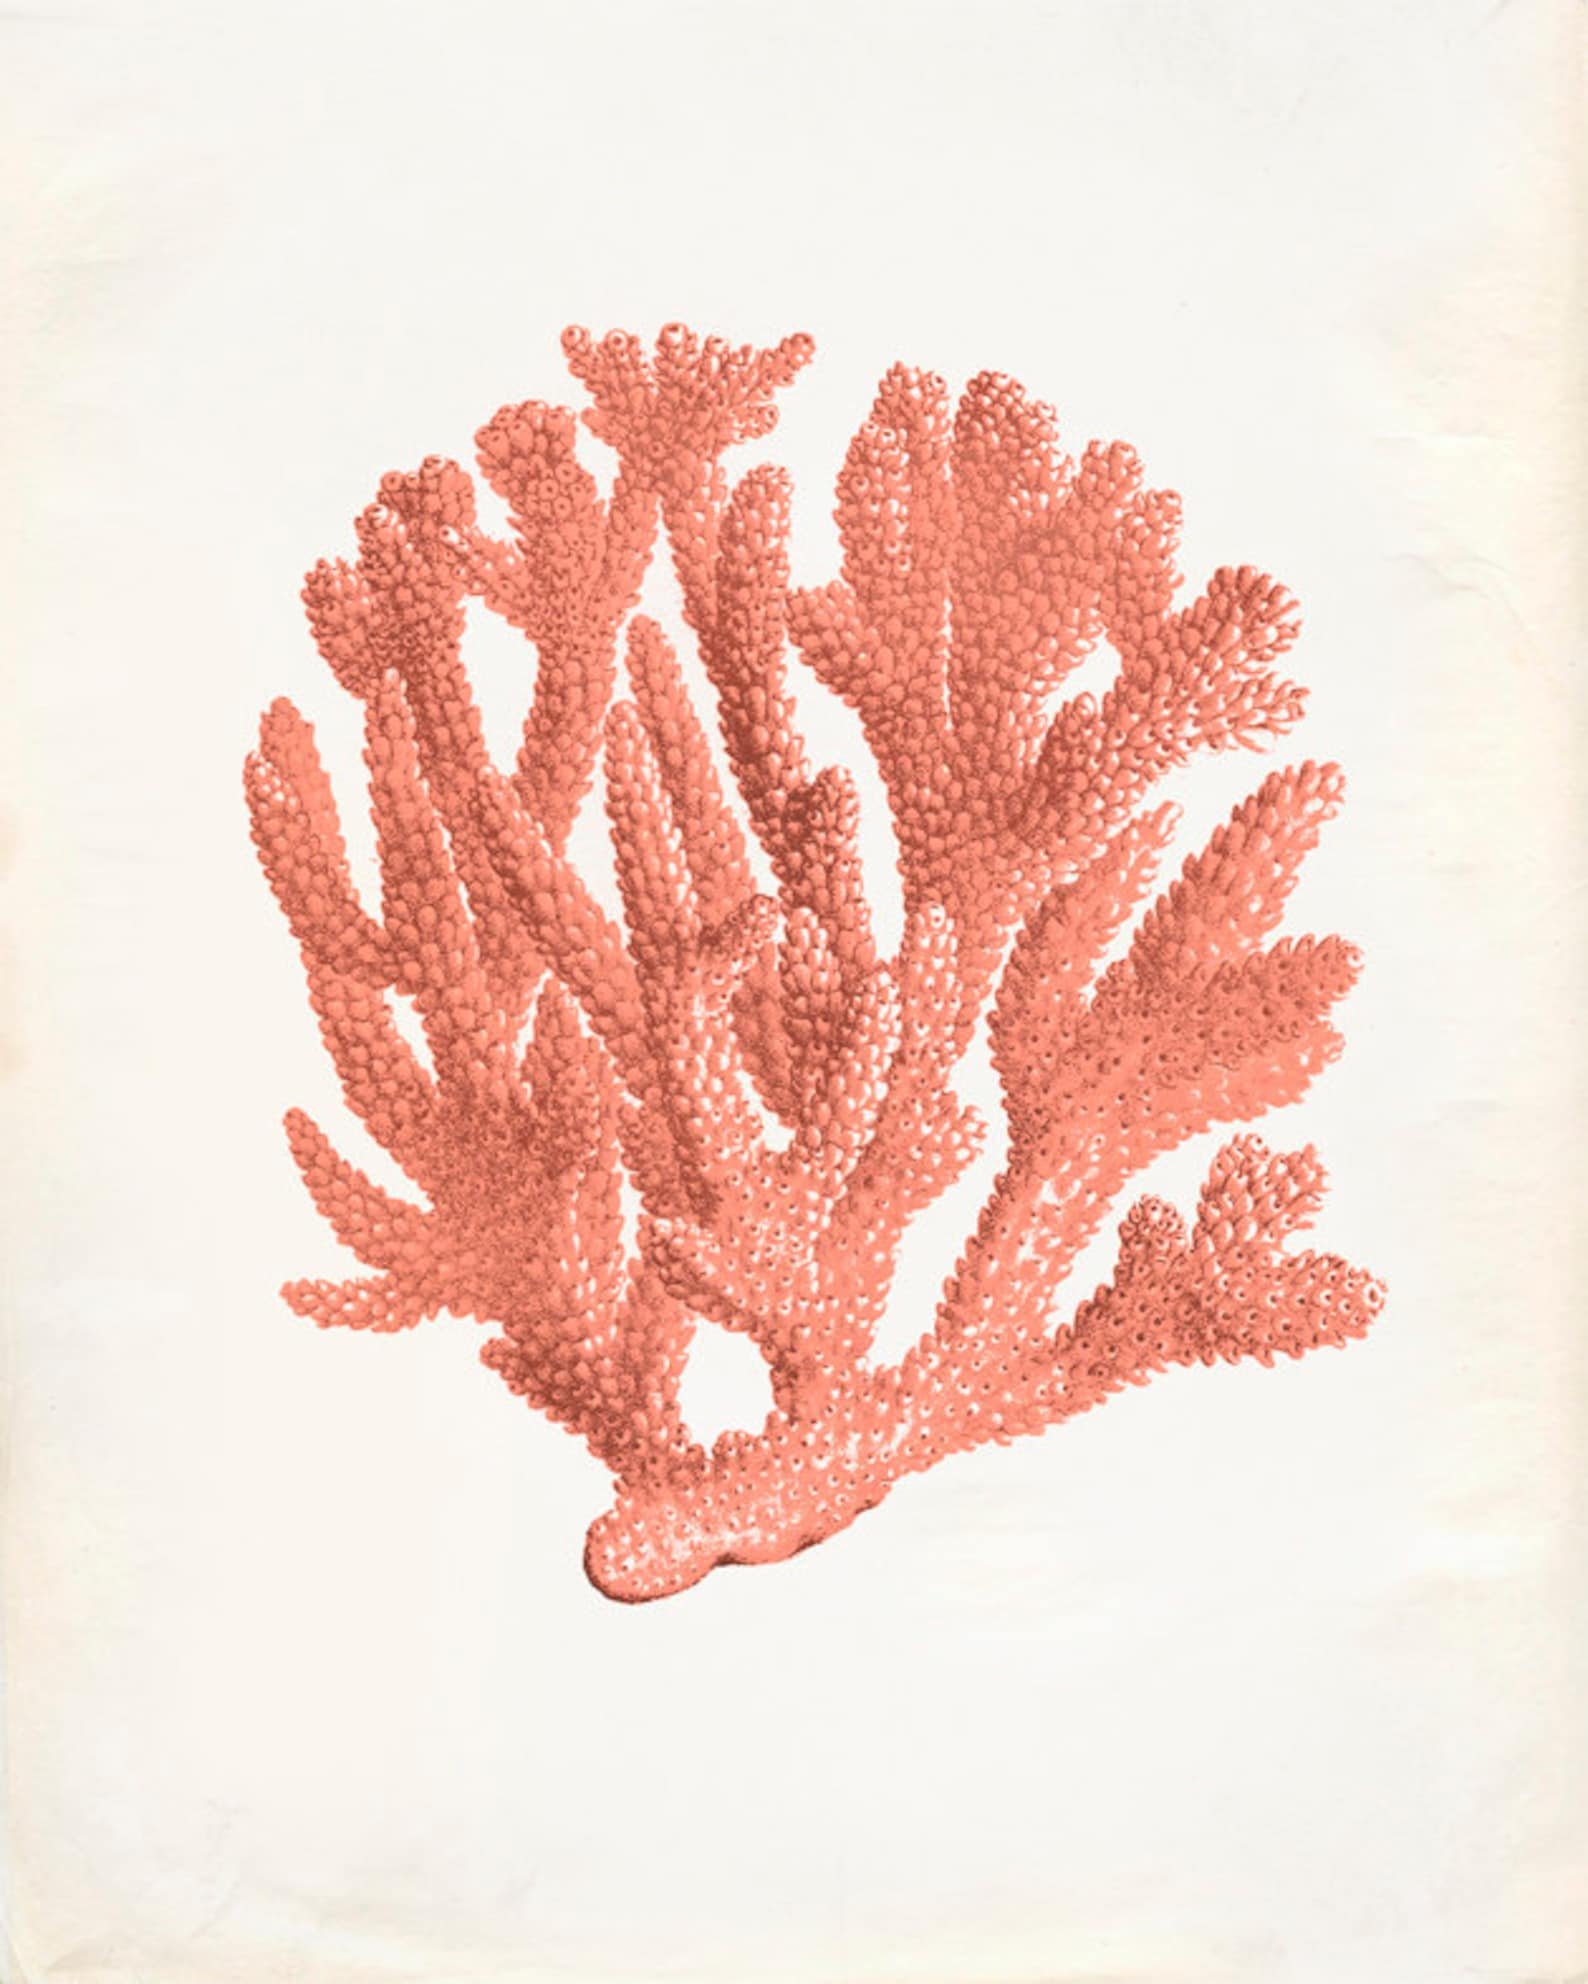 Кораллы для рисования